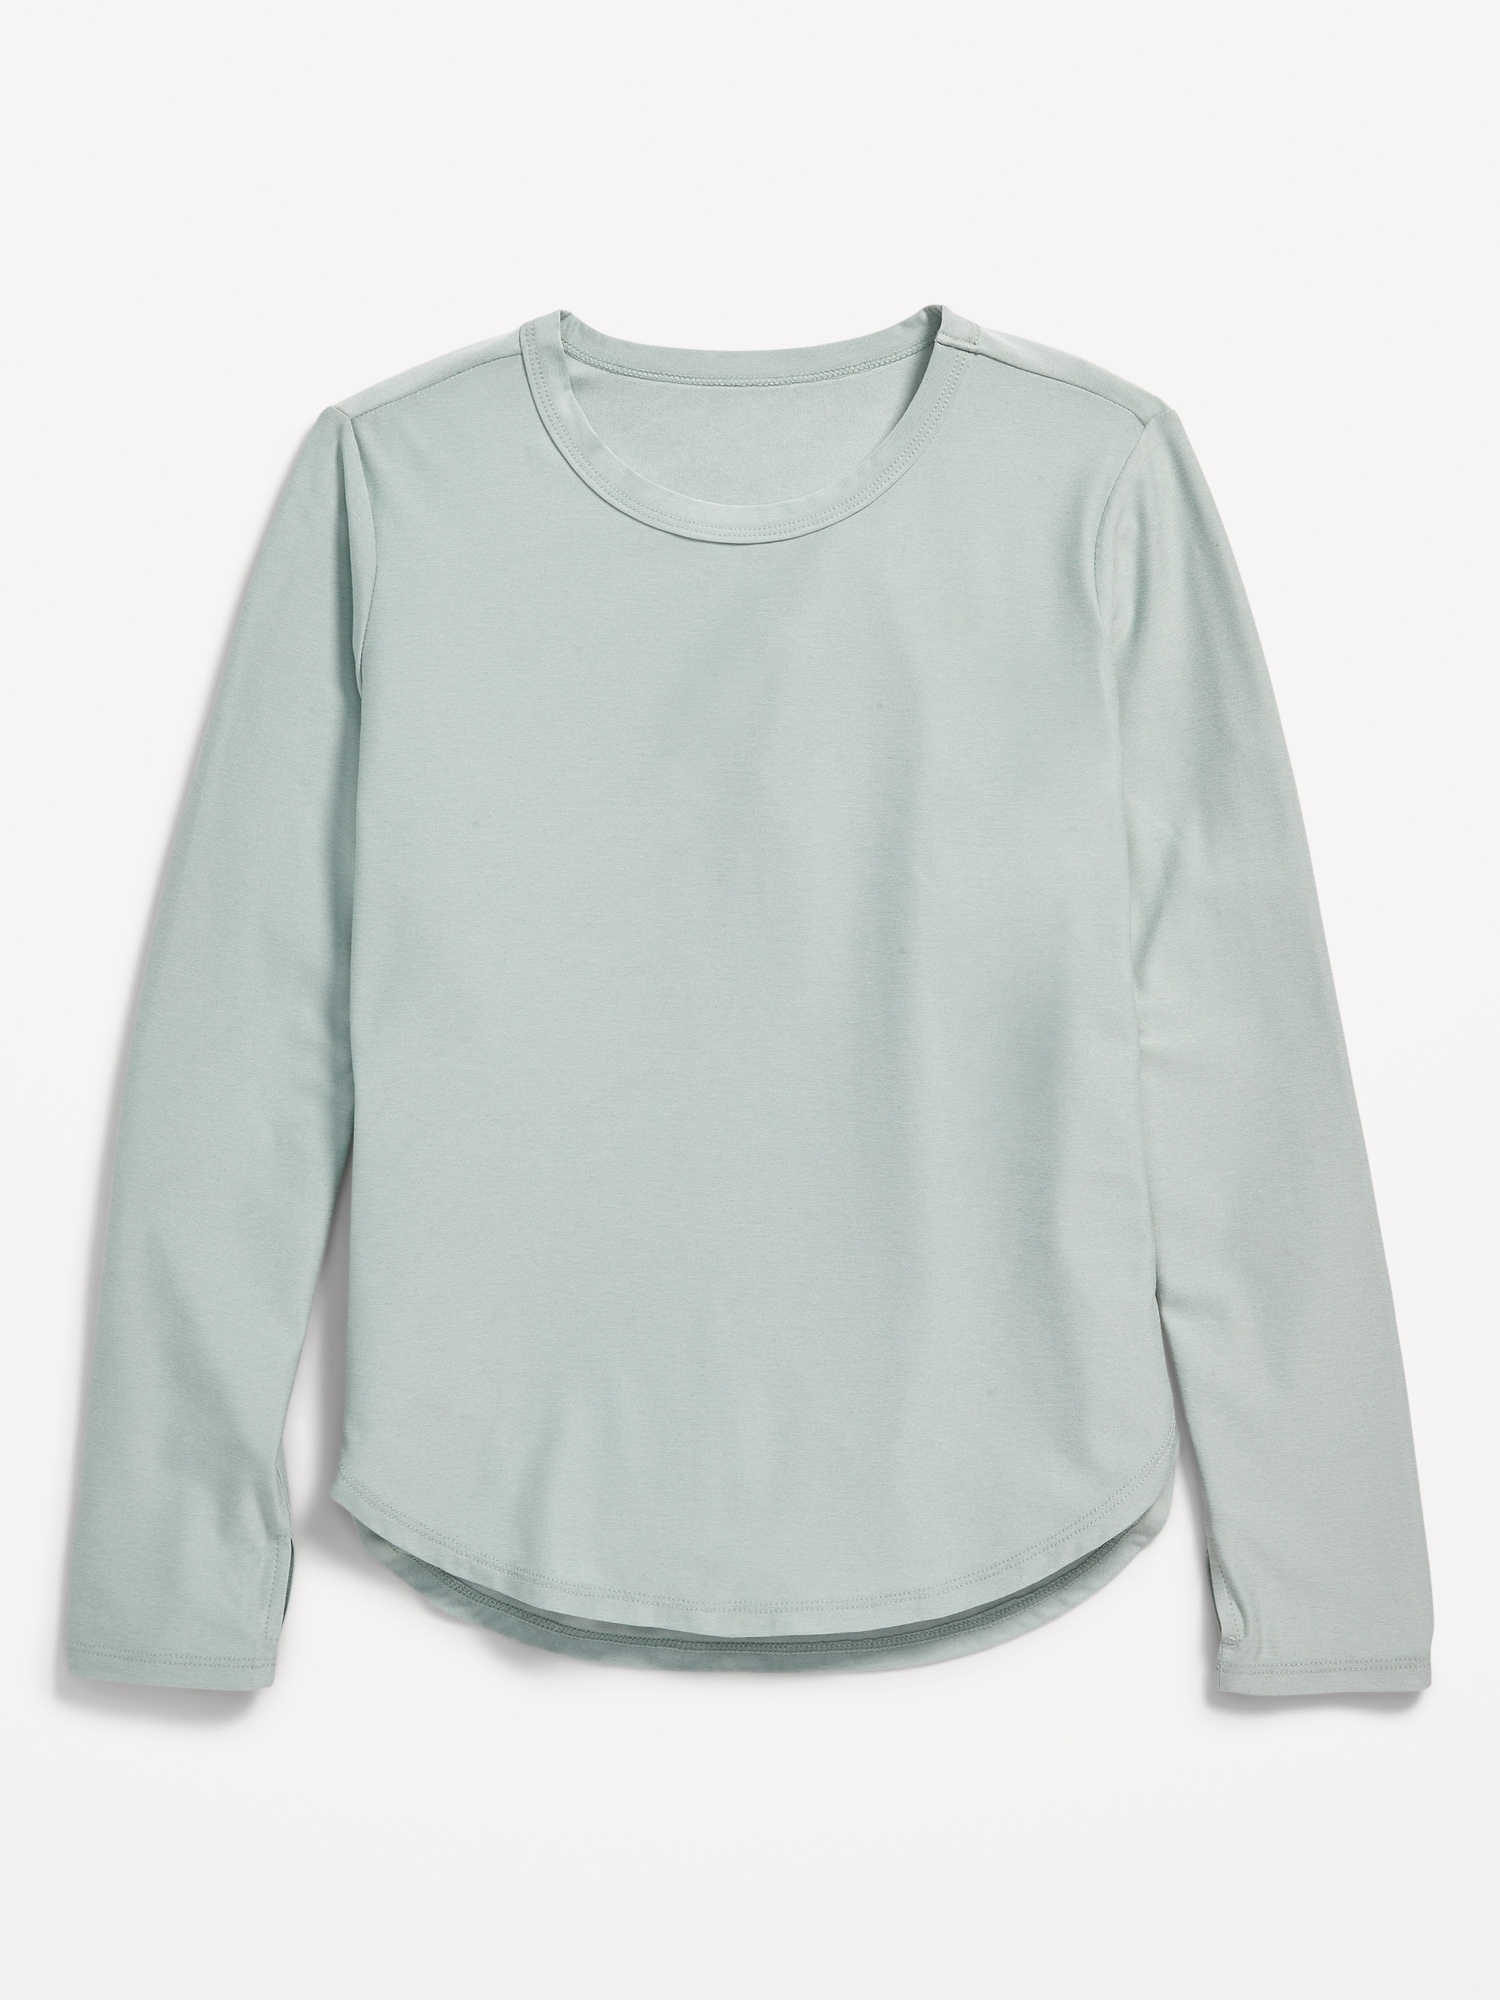 Cloud 94 Soft Go-Dry Long-Sleeve T-Shirt for Girls